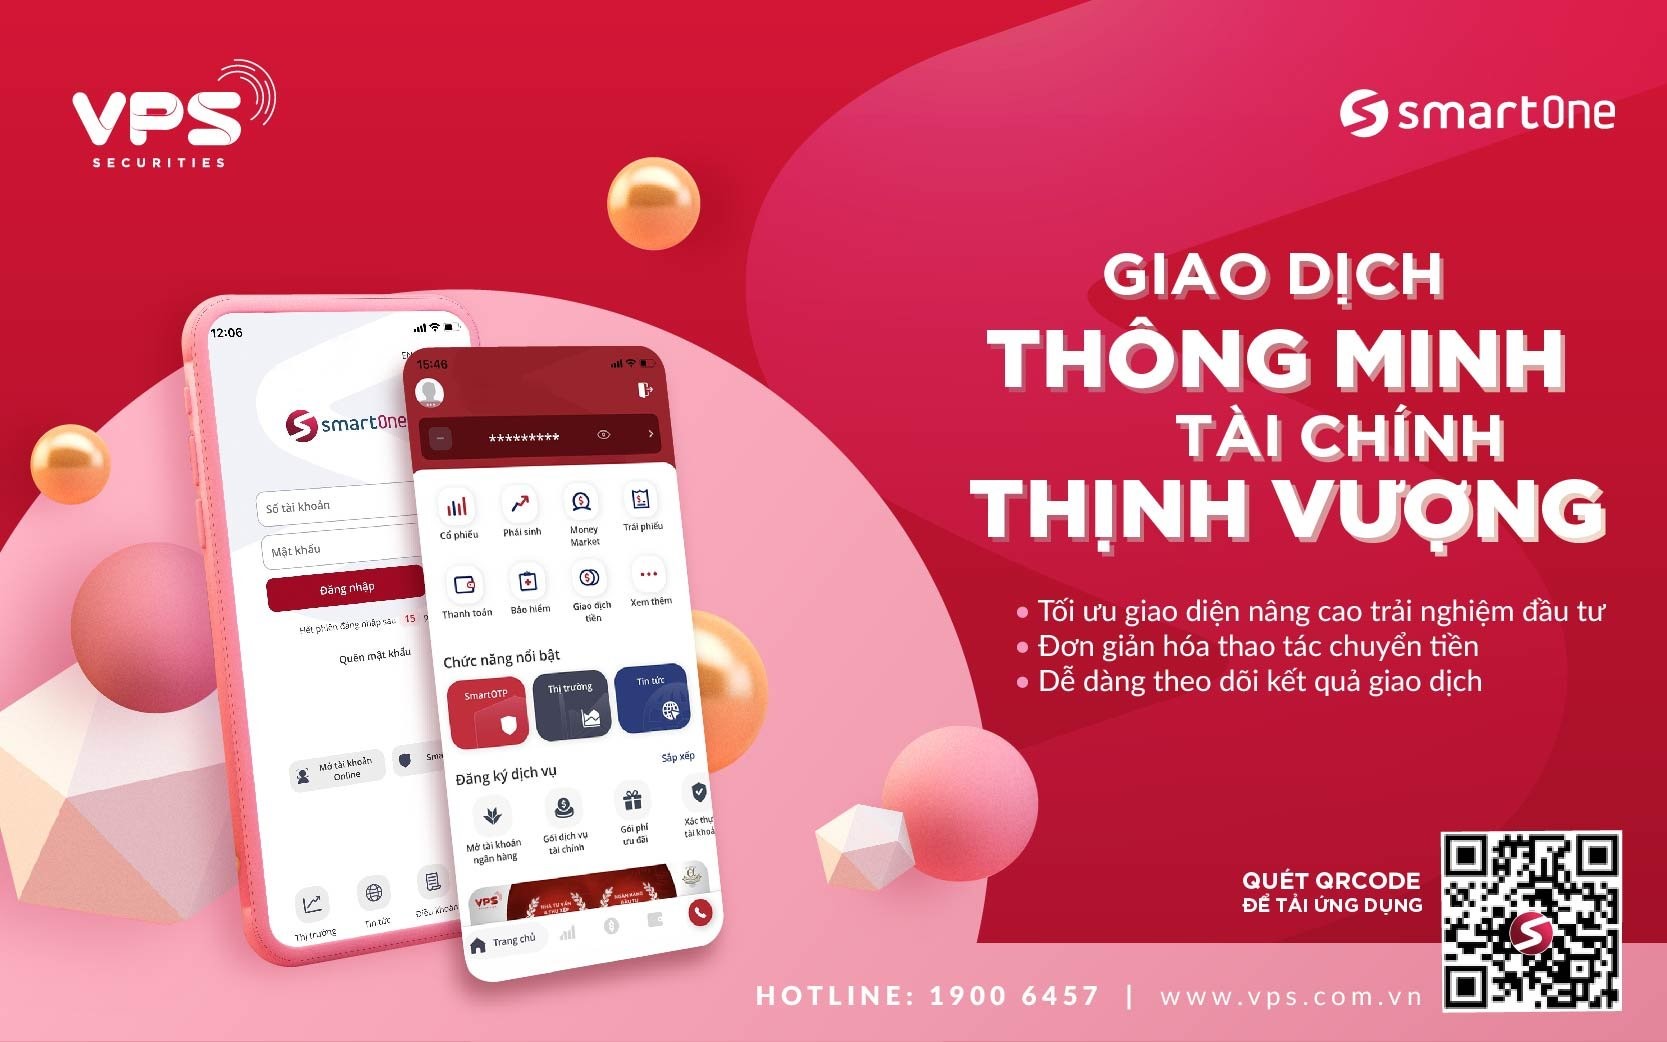 app-chung-khoan-smartone-cua-ngan-hang-thinh-vuong-vps